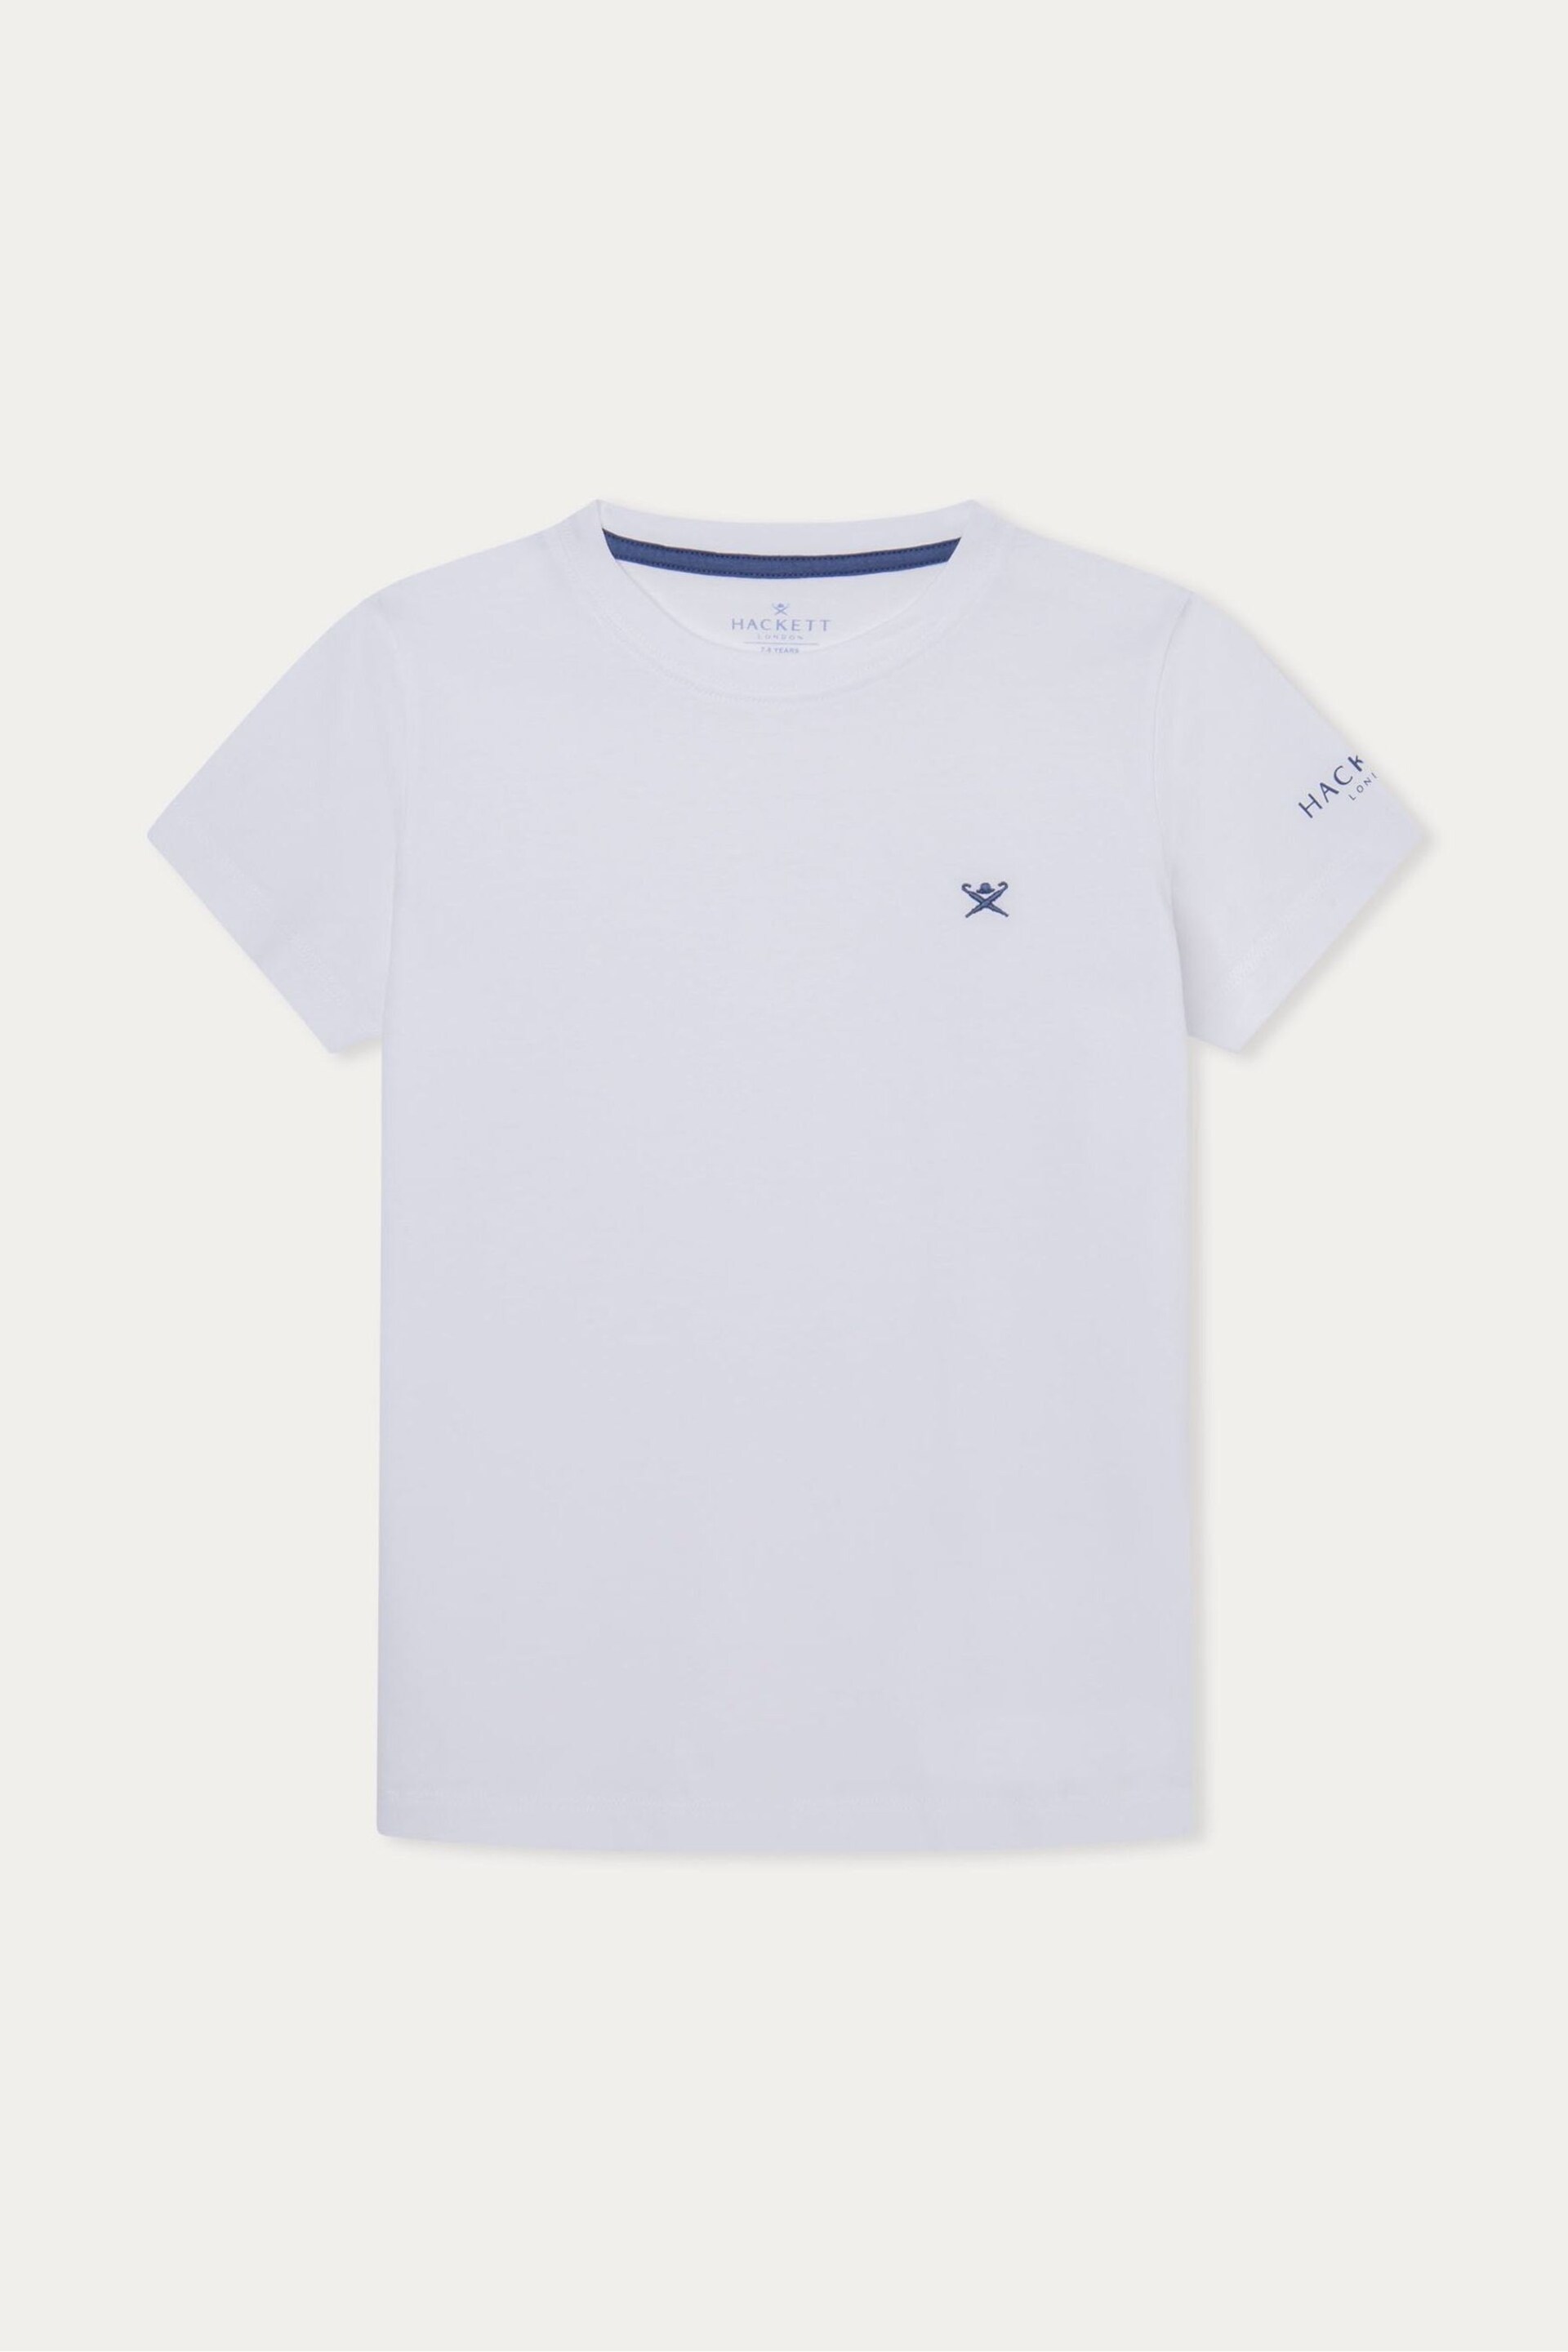 Hackett London Older Boys Short Sleeve White T-Shirt - Image 1 of 3